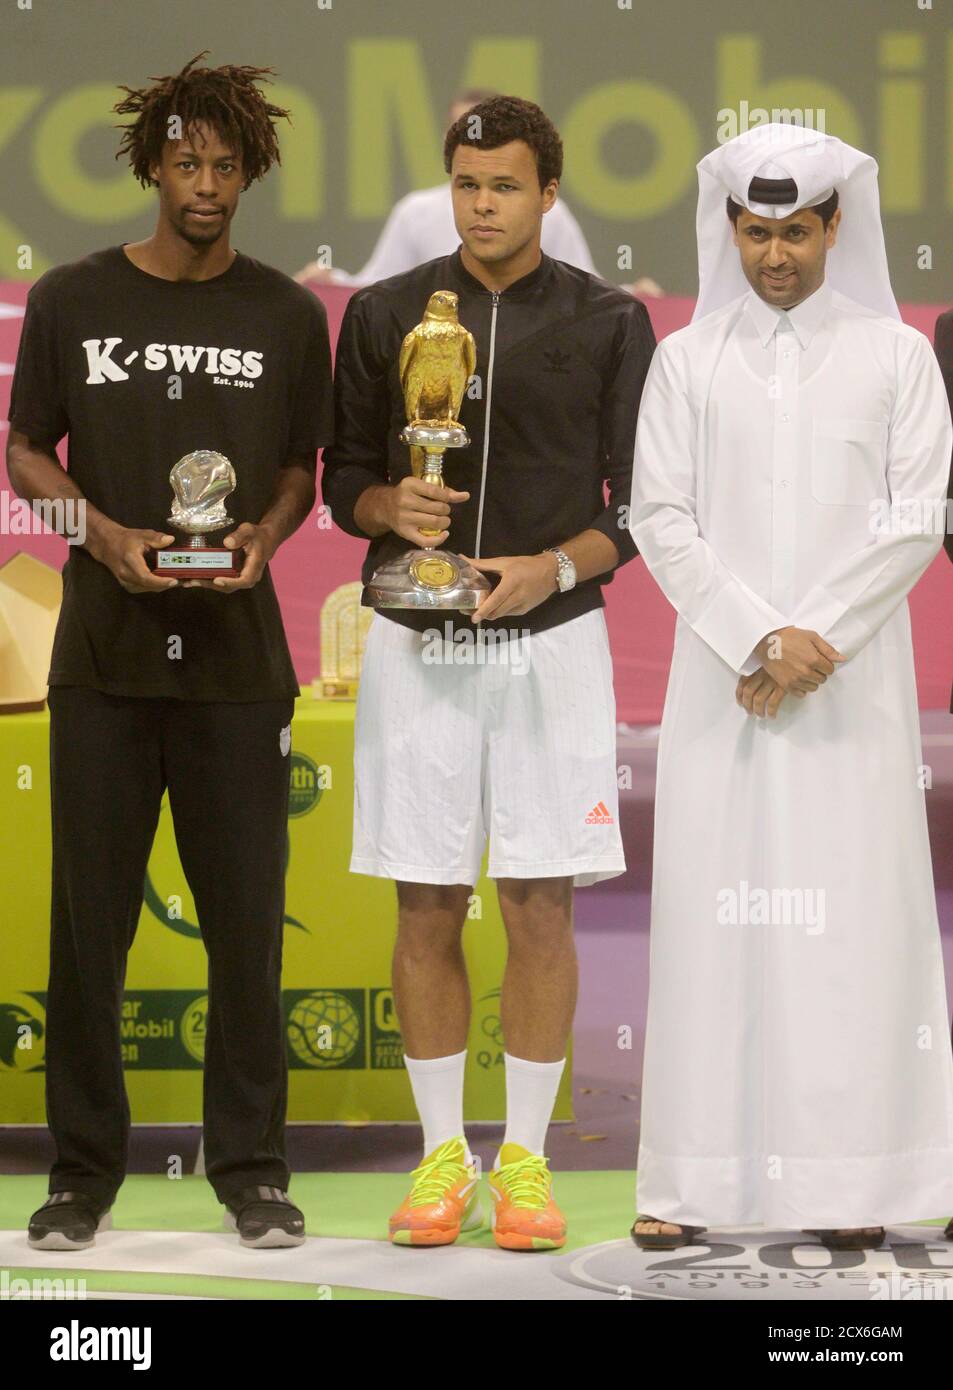 President qatar tennis federation al khelaifi hi-res stock photography and  images - Alamy